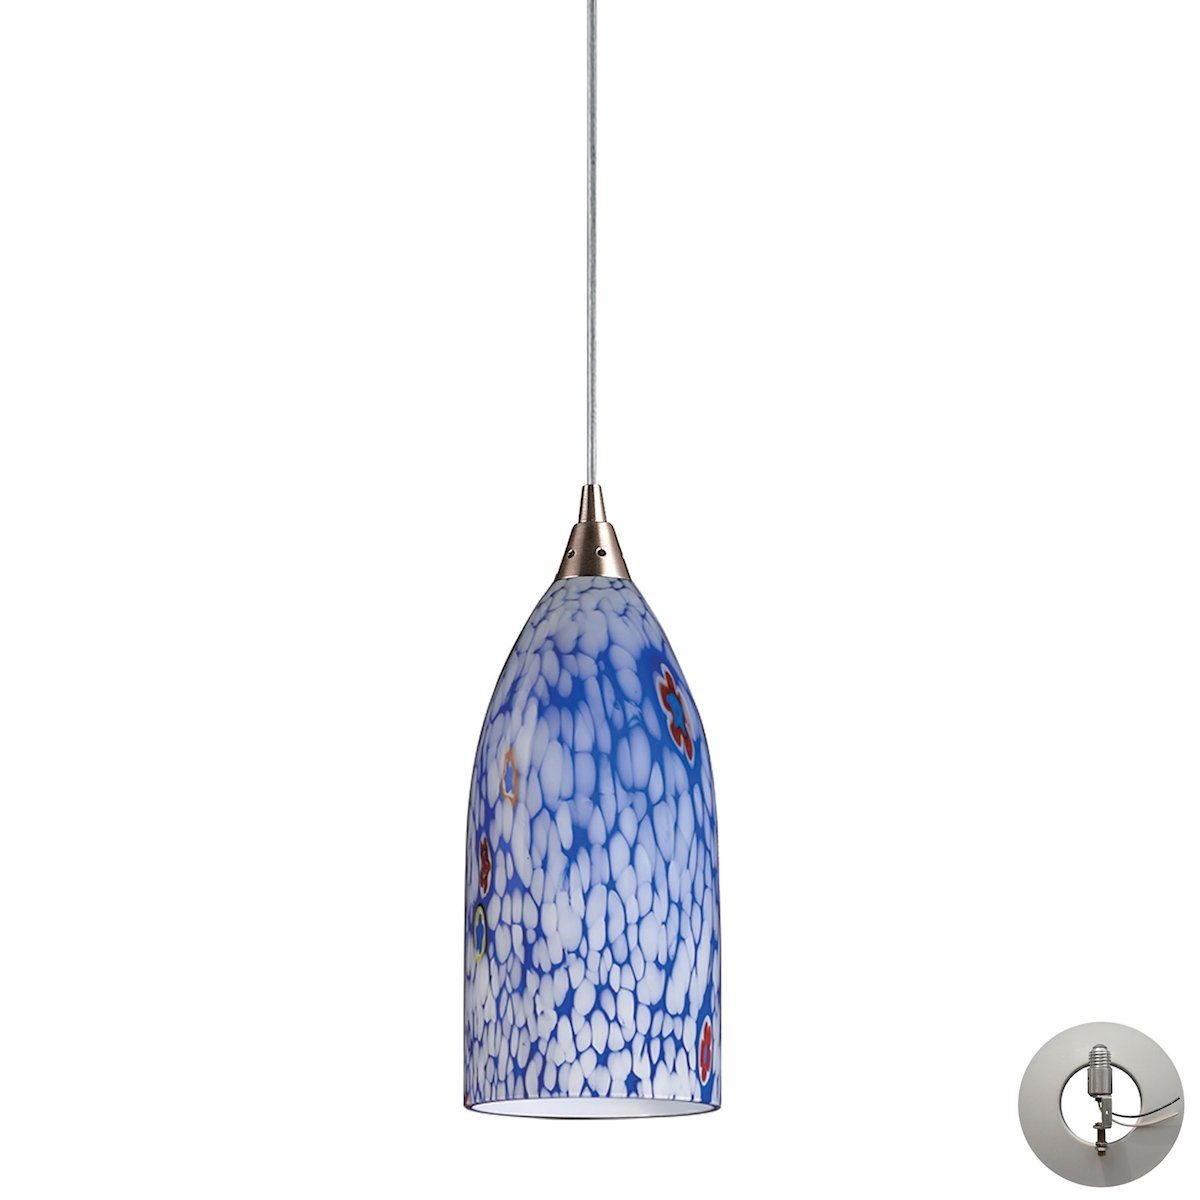 Verona Pendant In Satin Nickel And Starburst Blue Glass - Includes Recessed Lighting Kit Ceiling Elk Lighting 